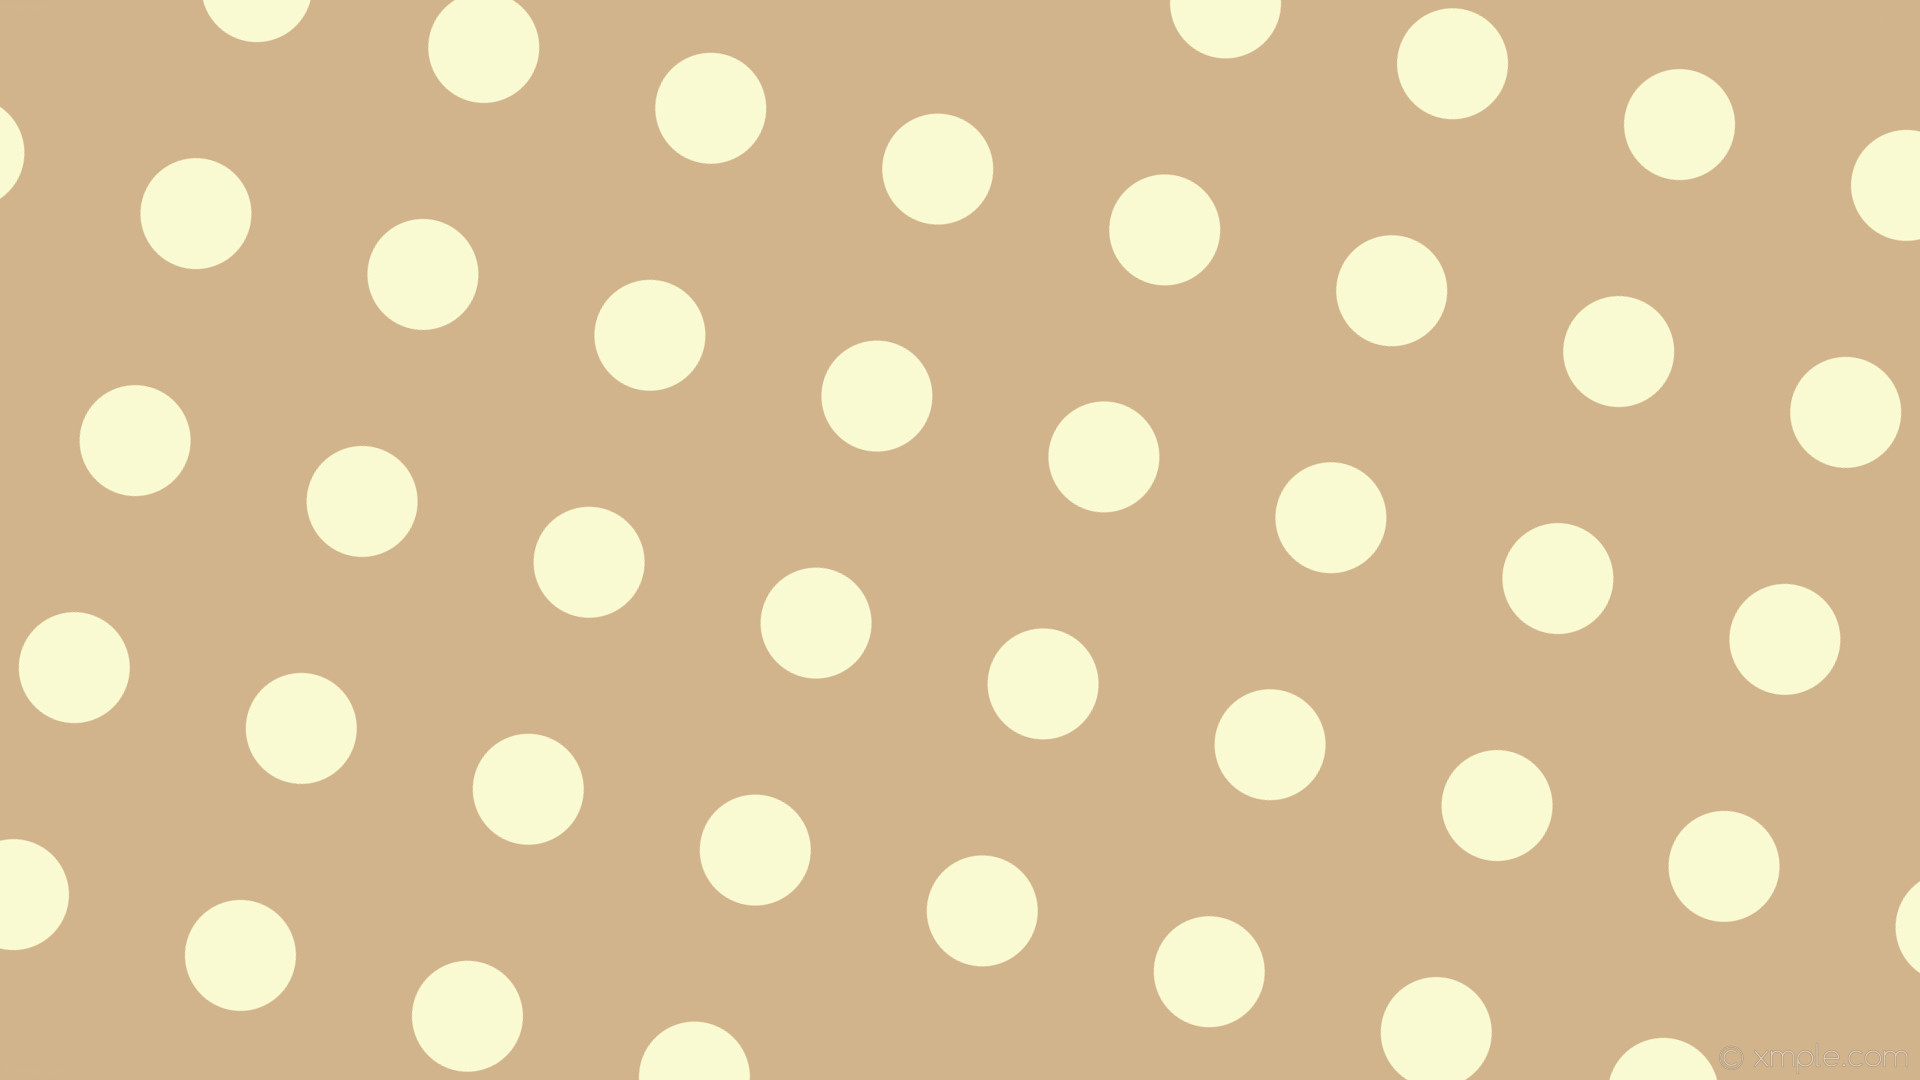 Wallpaper yellow dots brown polka spots tan light goldenrod yellow #d2b48c #fafad2 345